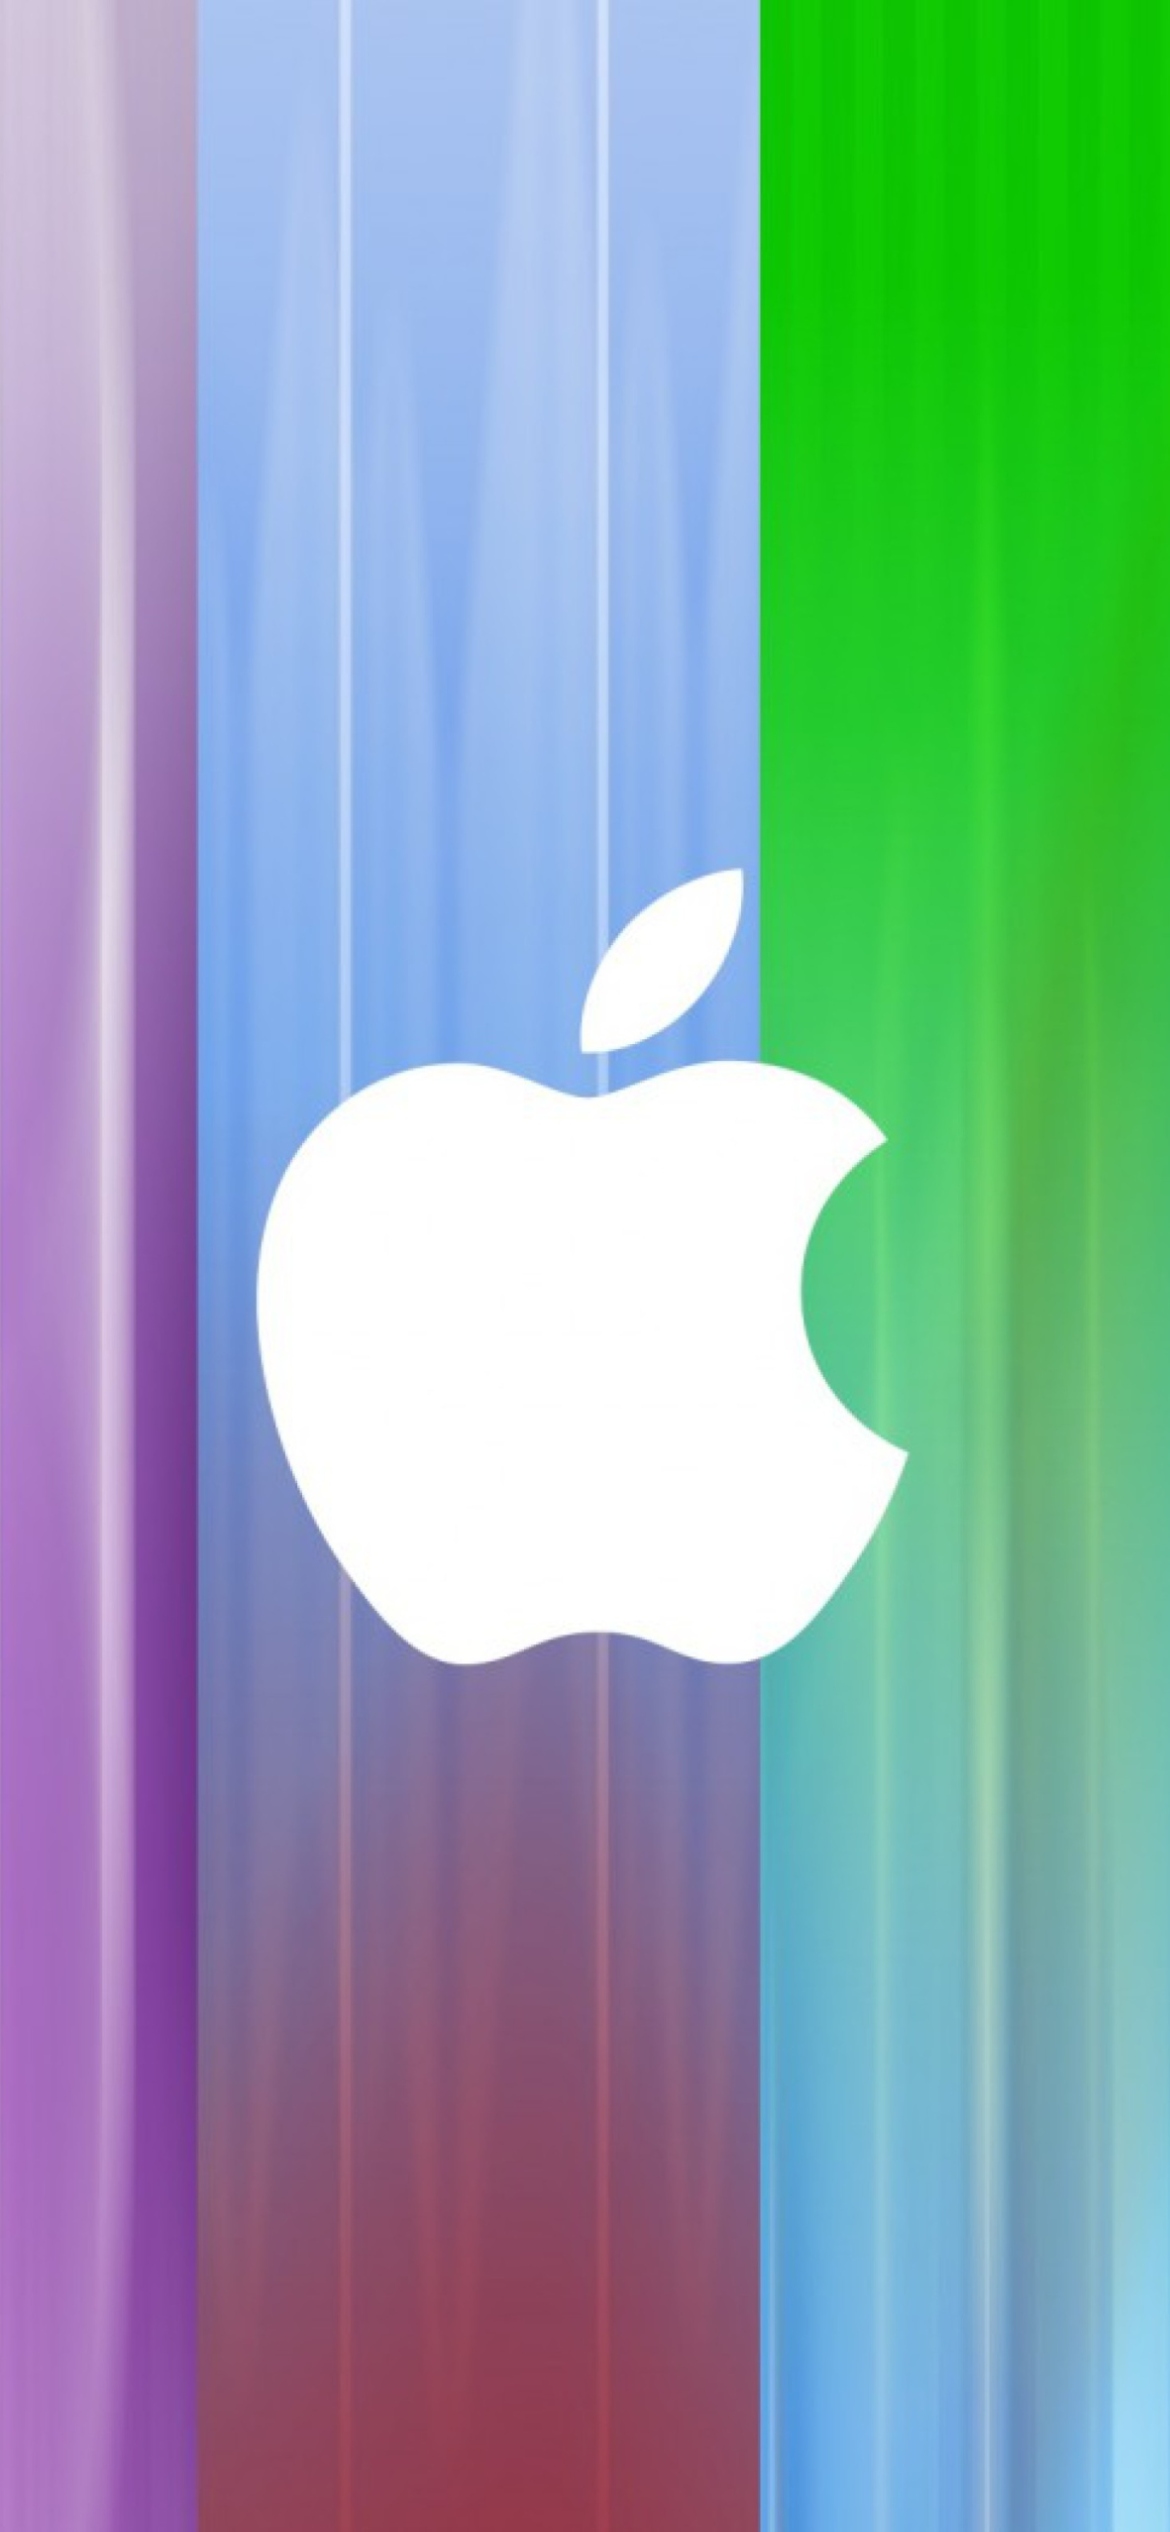 Apple Iphone5 wallpaper 1170x2532